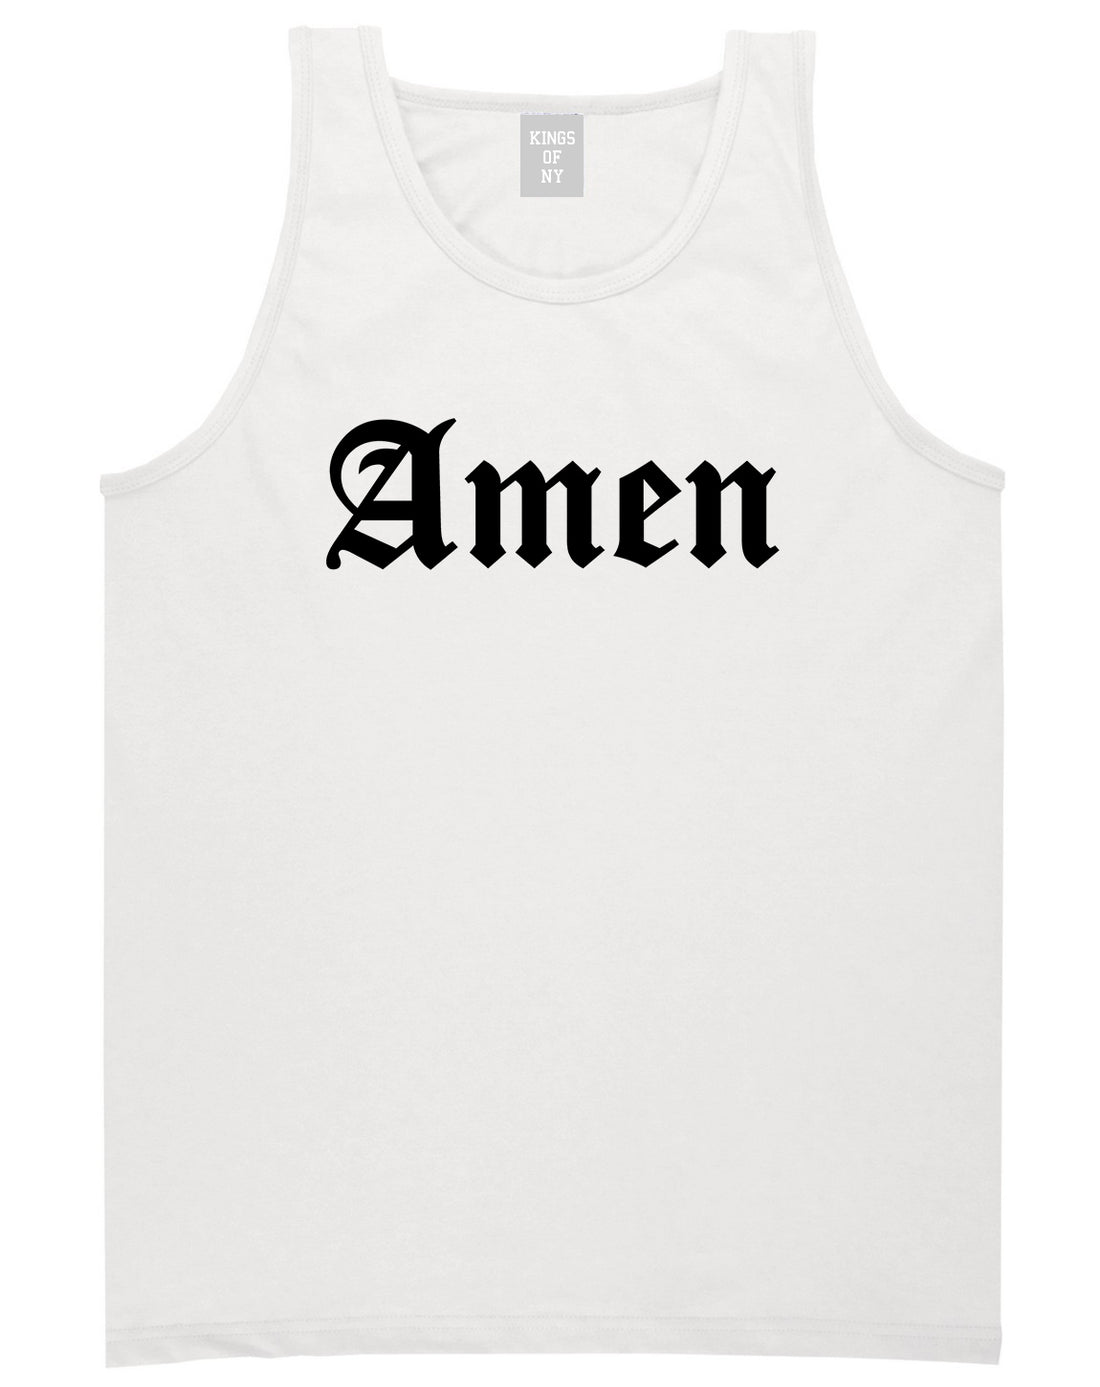 Amen Old English Prayer Mens Tank Top T-Shirt White